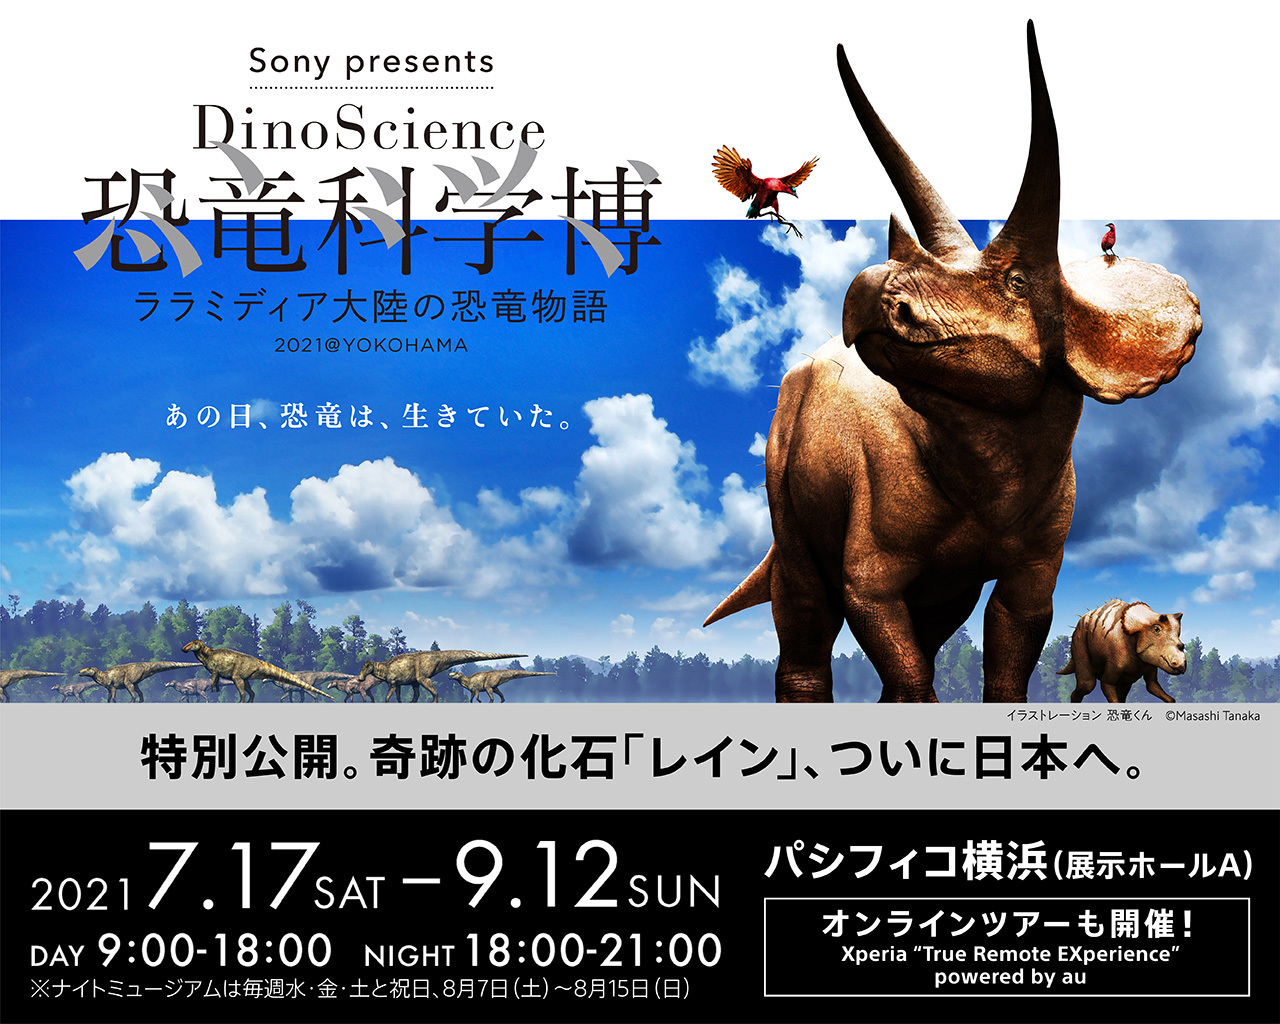 『Sony presents DinoScience 恐竜科学博 〜ララミディア大陸の恐竜物語〜』